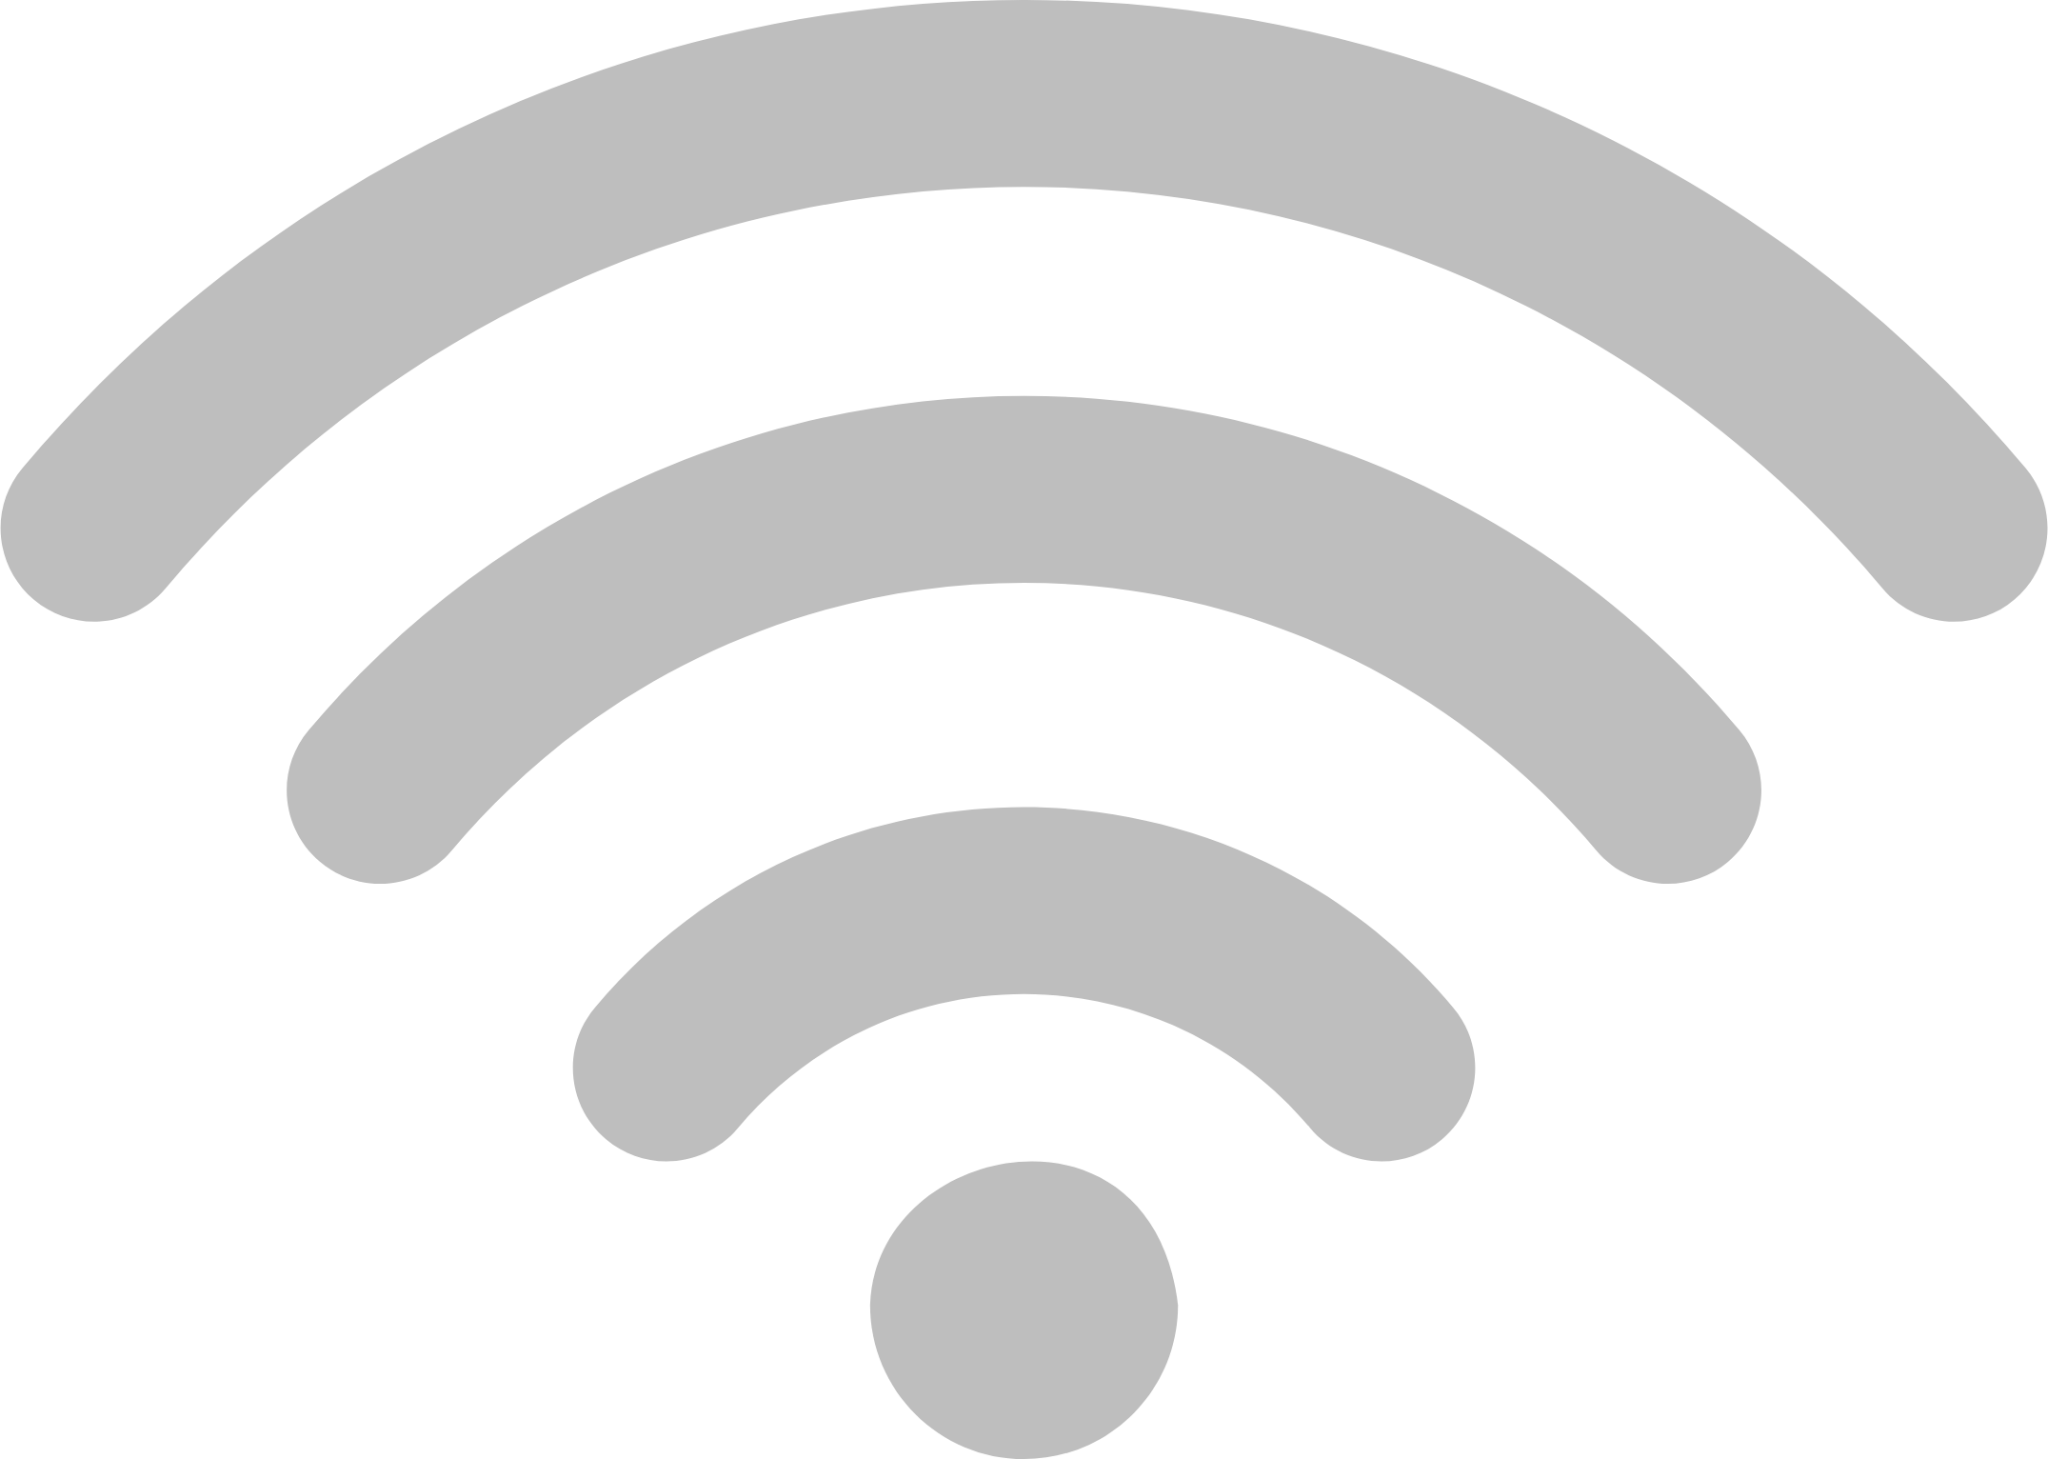 network wireless hotspot icon